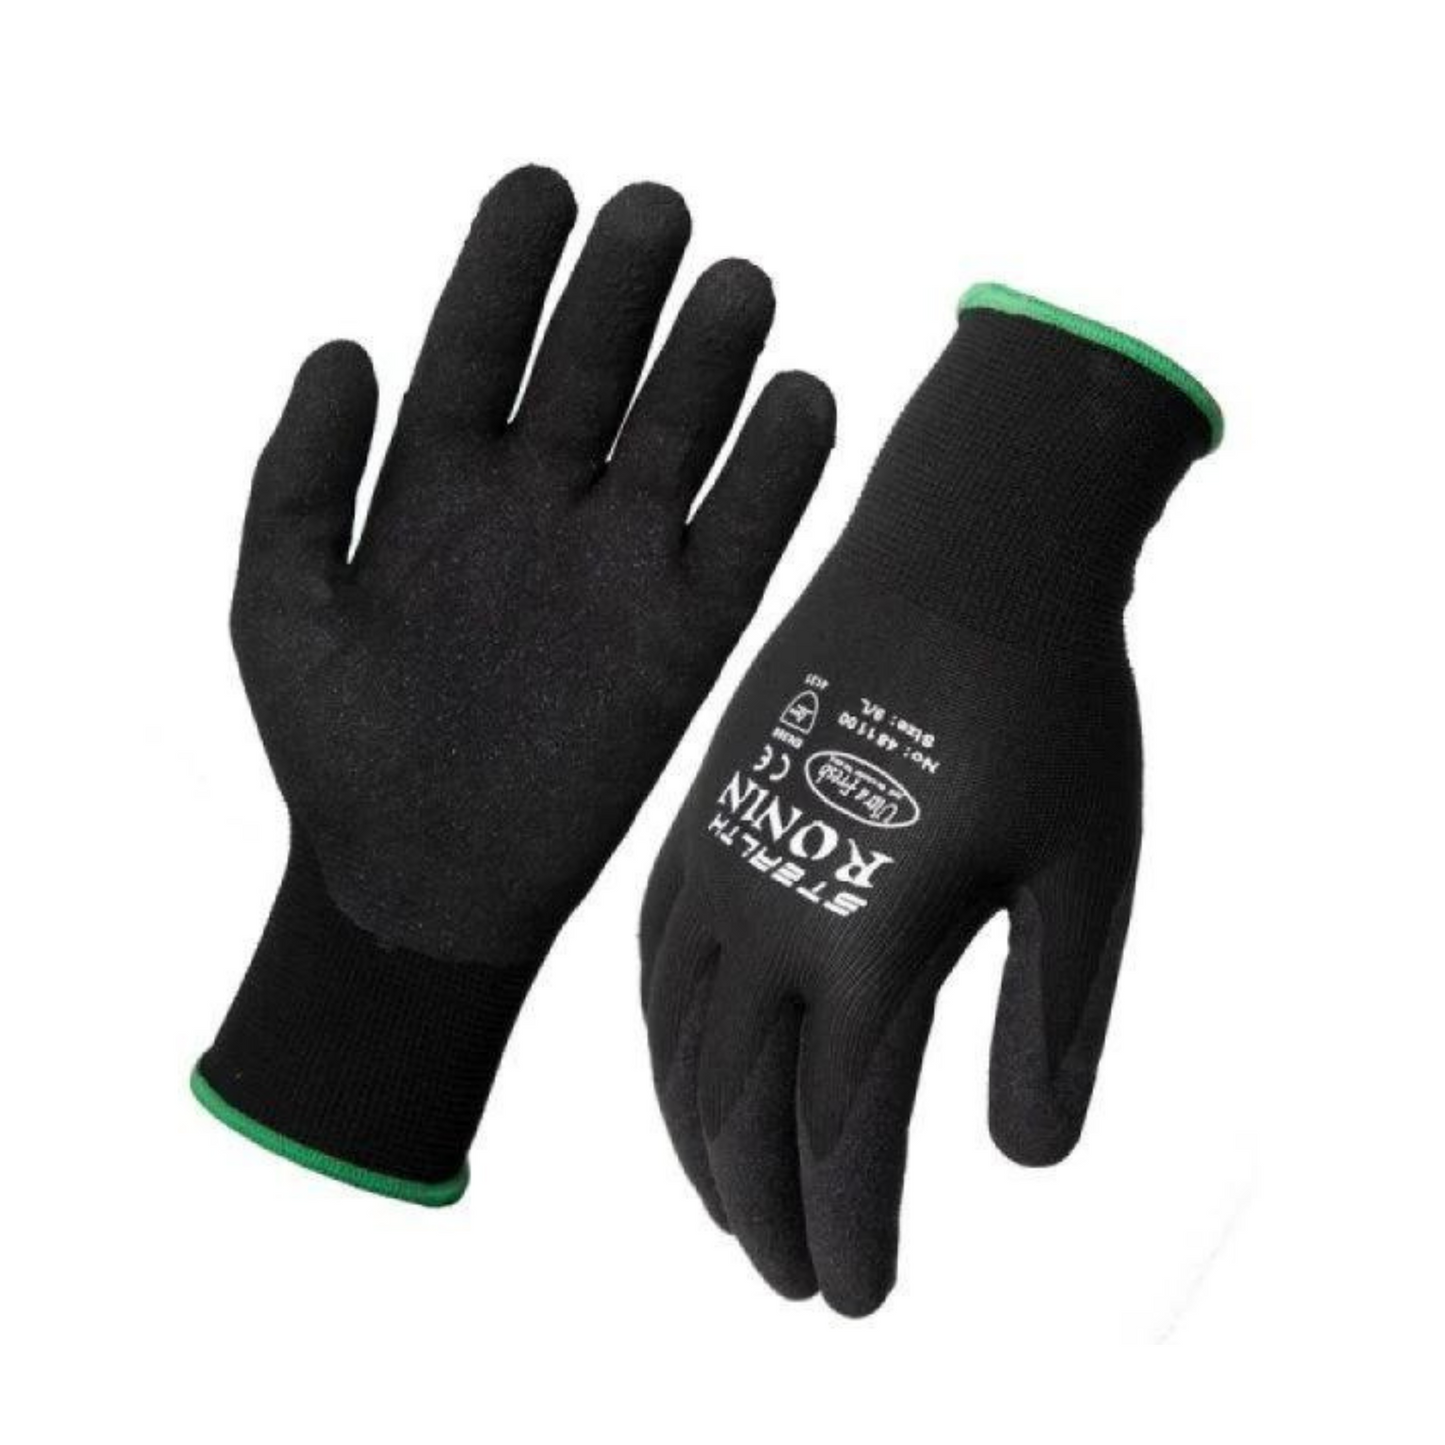 Stealth Ronin Black Work Gloves - XL Pack (12pc)